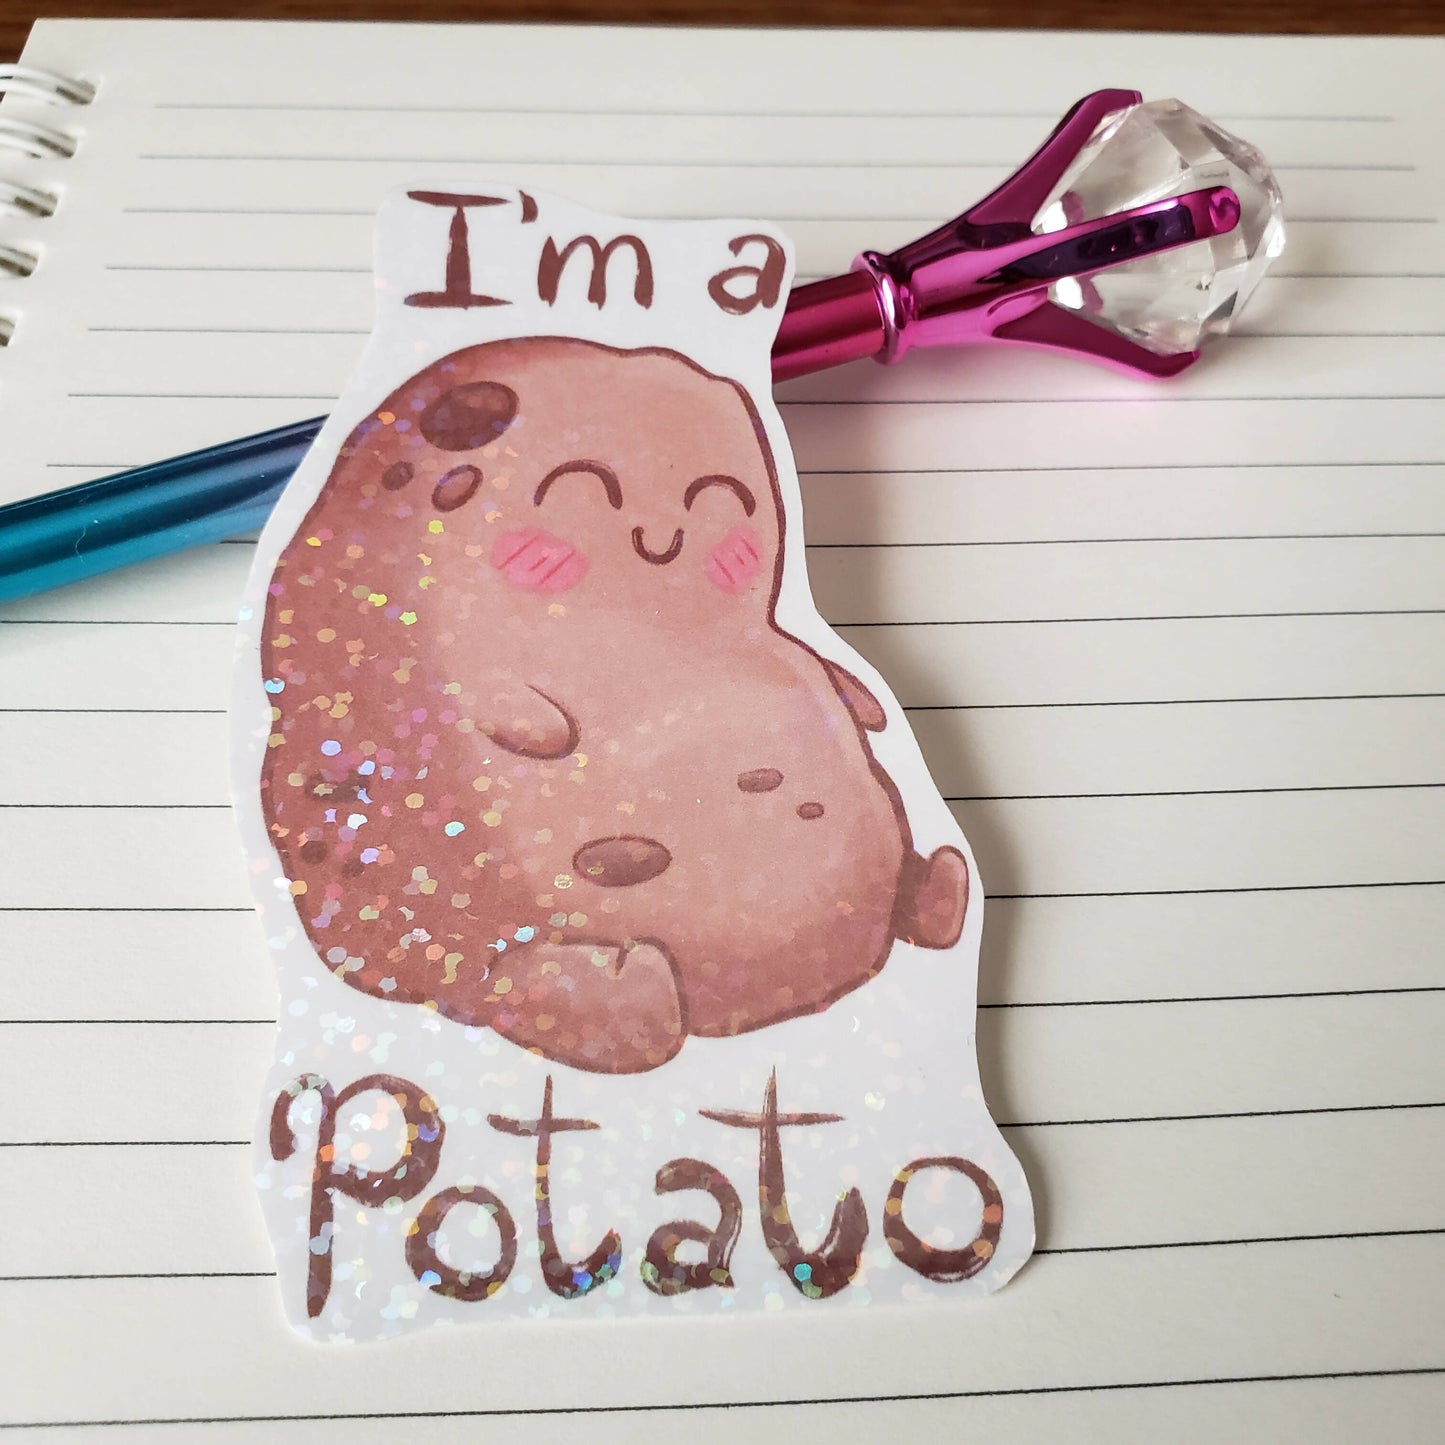 I'm a potato sticker